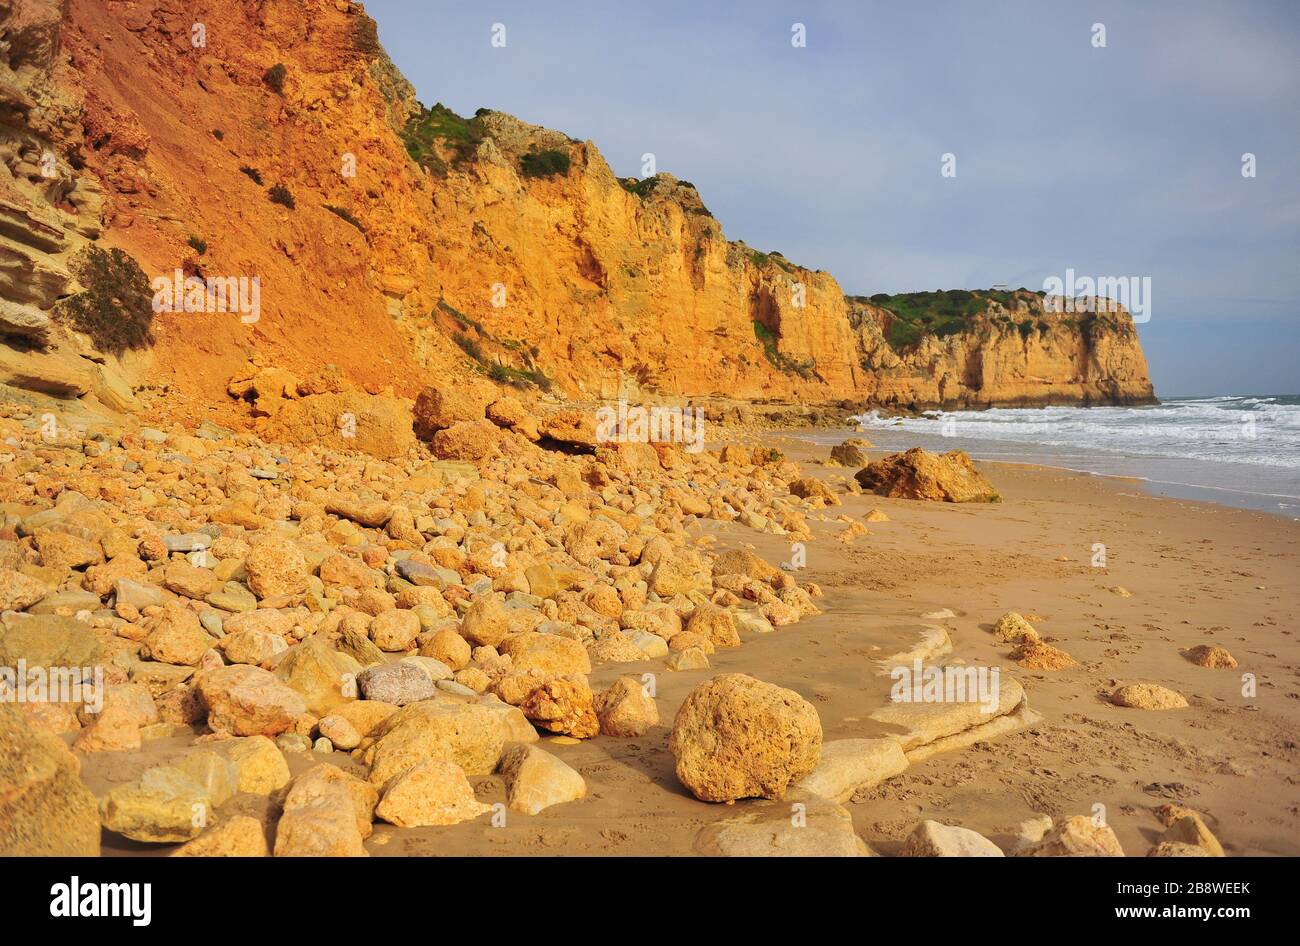 Beautiful rocky coastline at Lagos resort, Atlantic ocean, Portugal Stock Photo